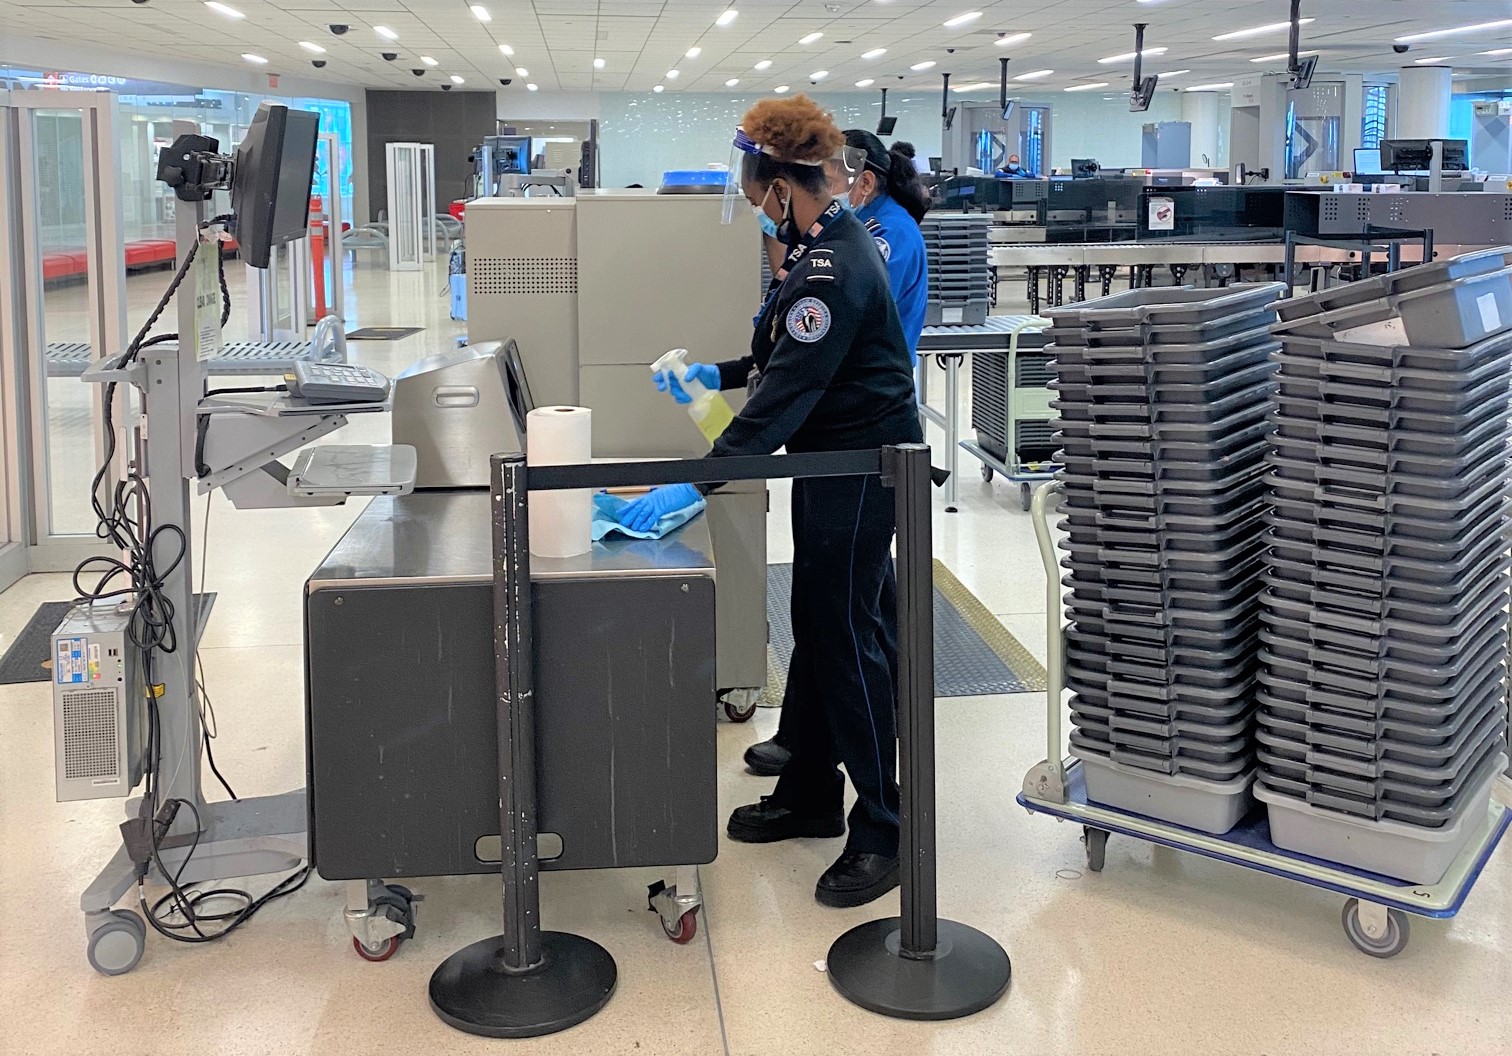 TSA officers at Philadelphia International Airport disinfecting surfaces at a security checkpoint. (TSA photo)